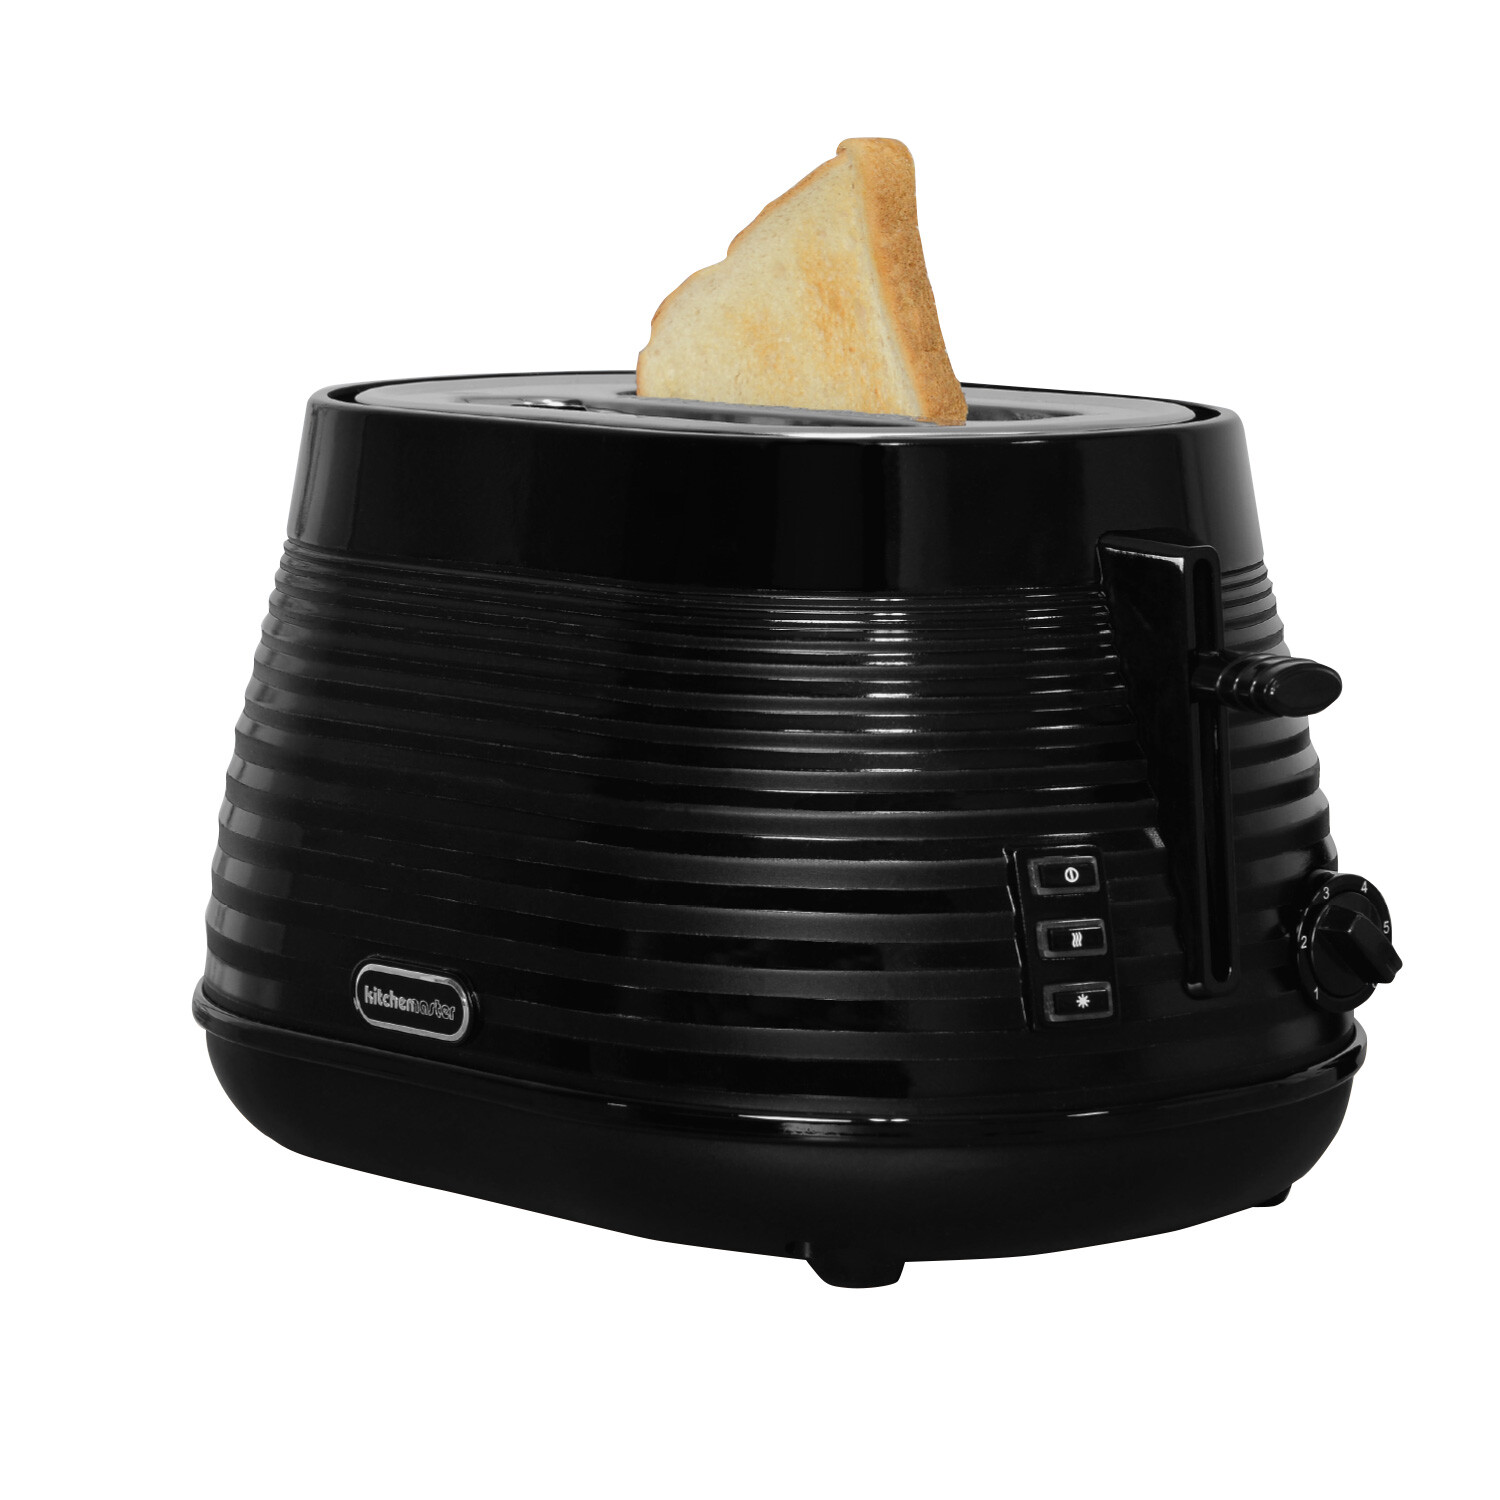 Nera Black 2 Slot Ribbed Plastic Toaster - Black Image 1